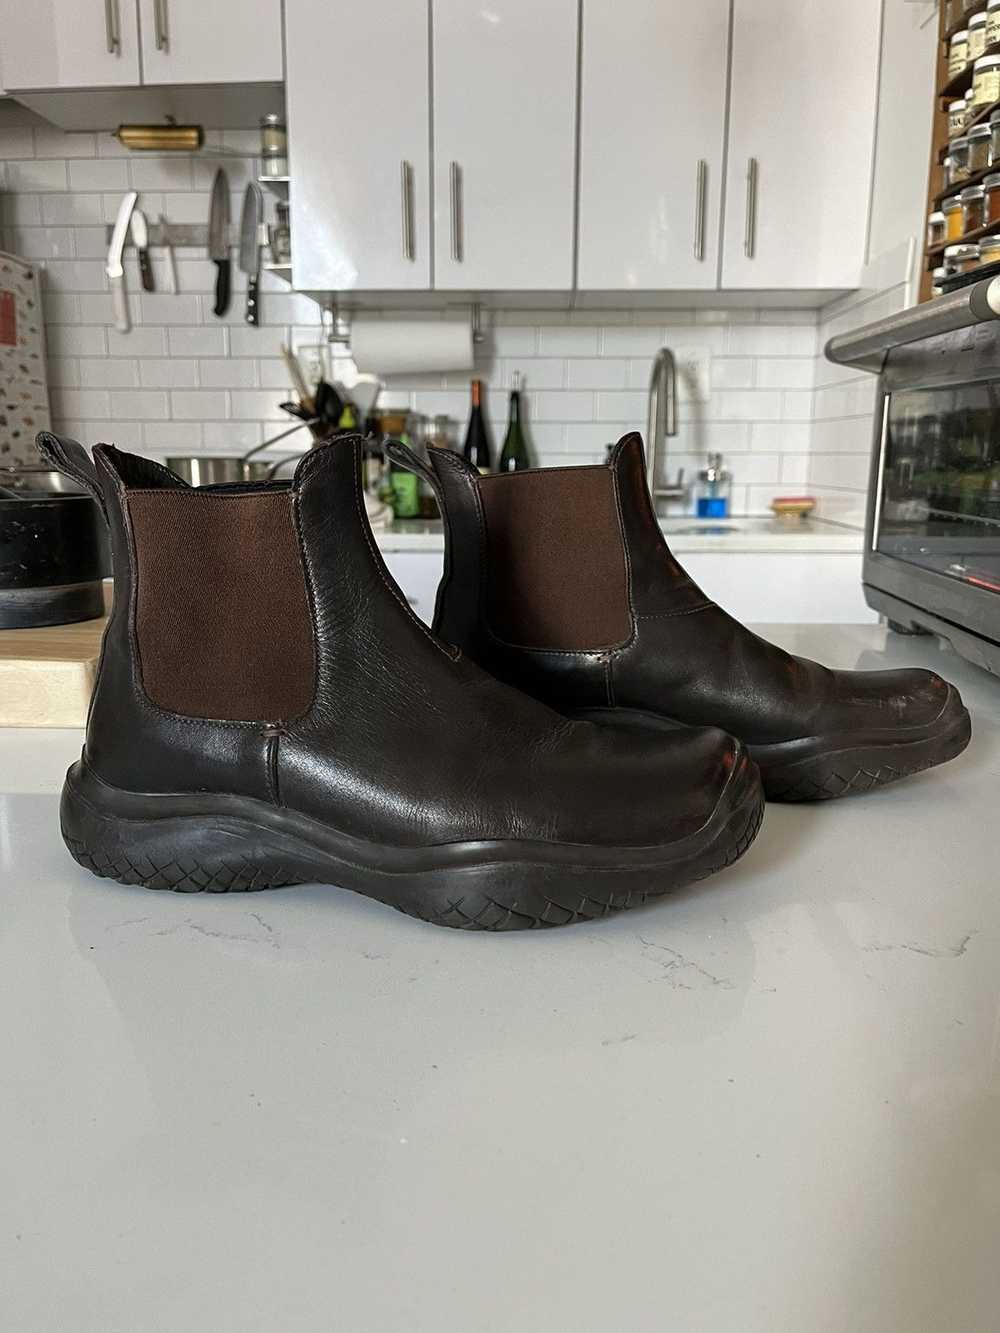 Prada 90s Prada leather boots - image 2